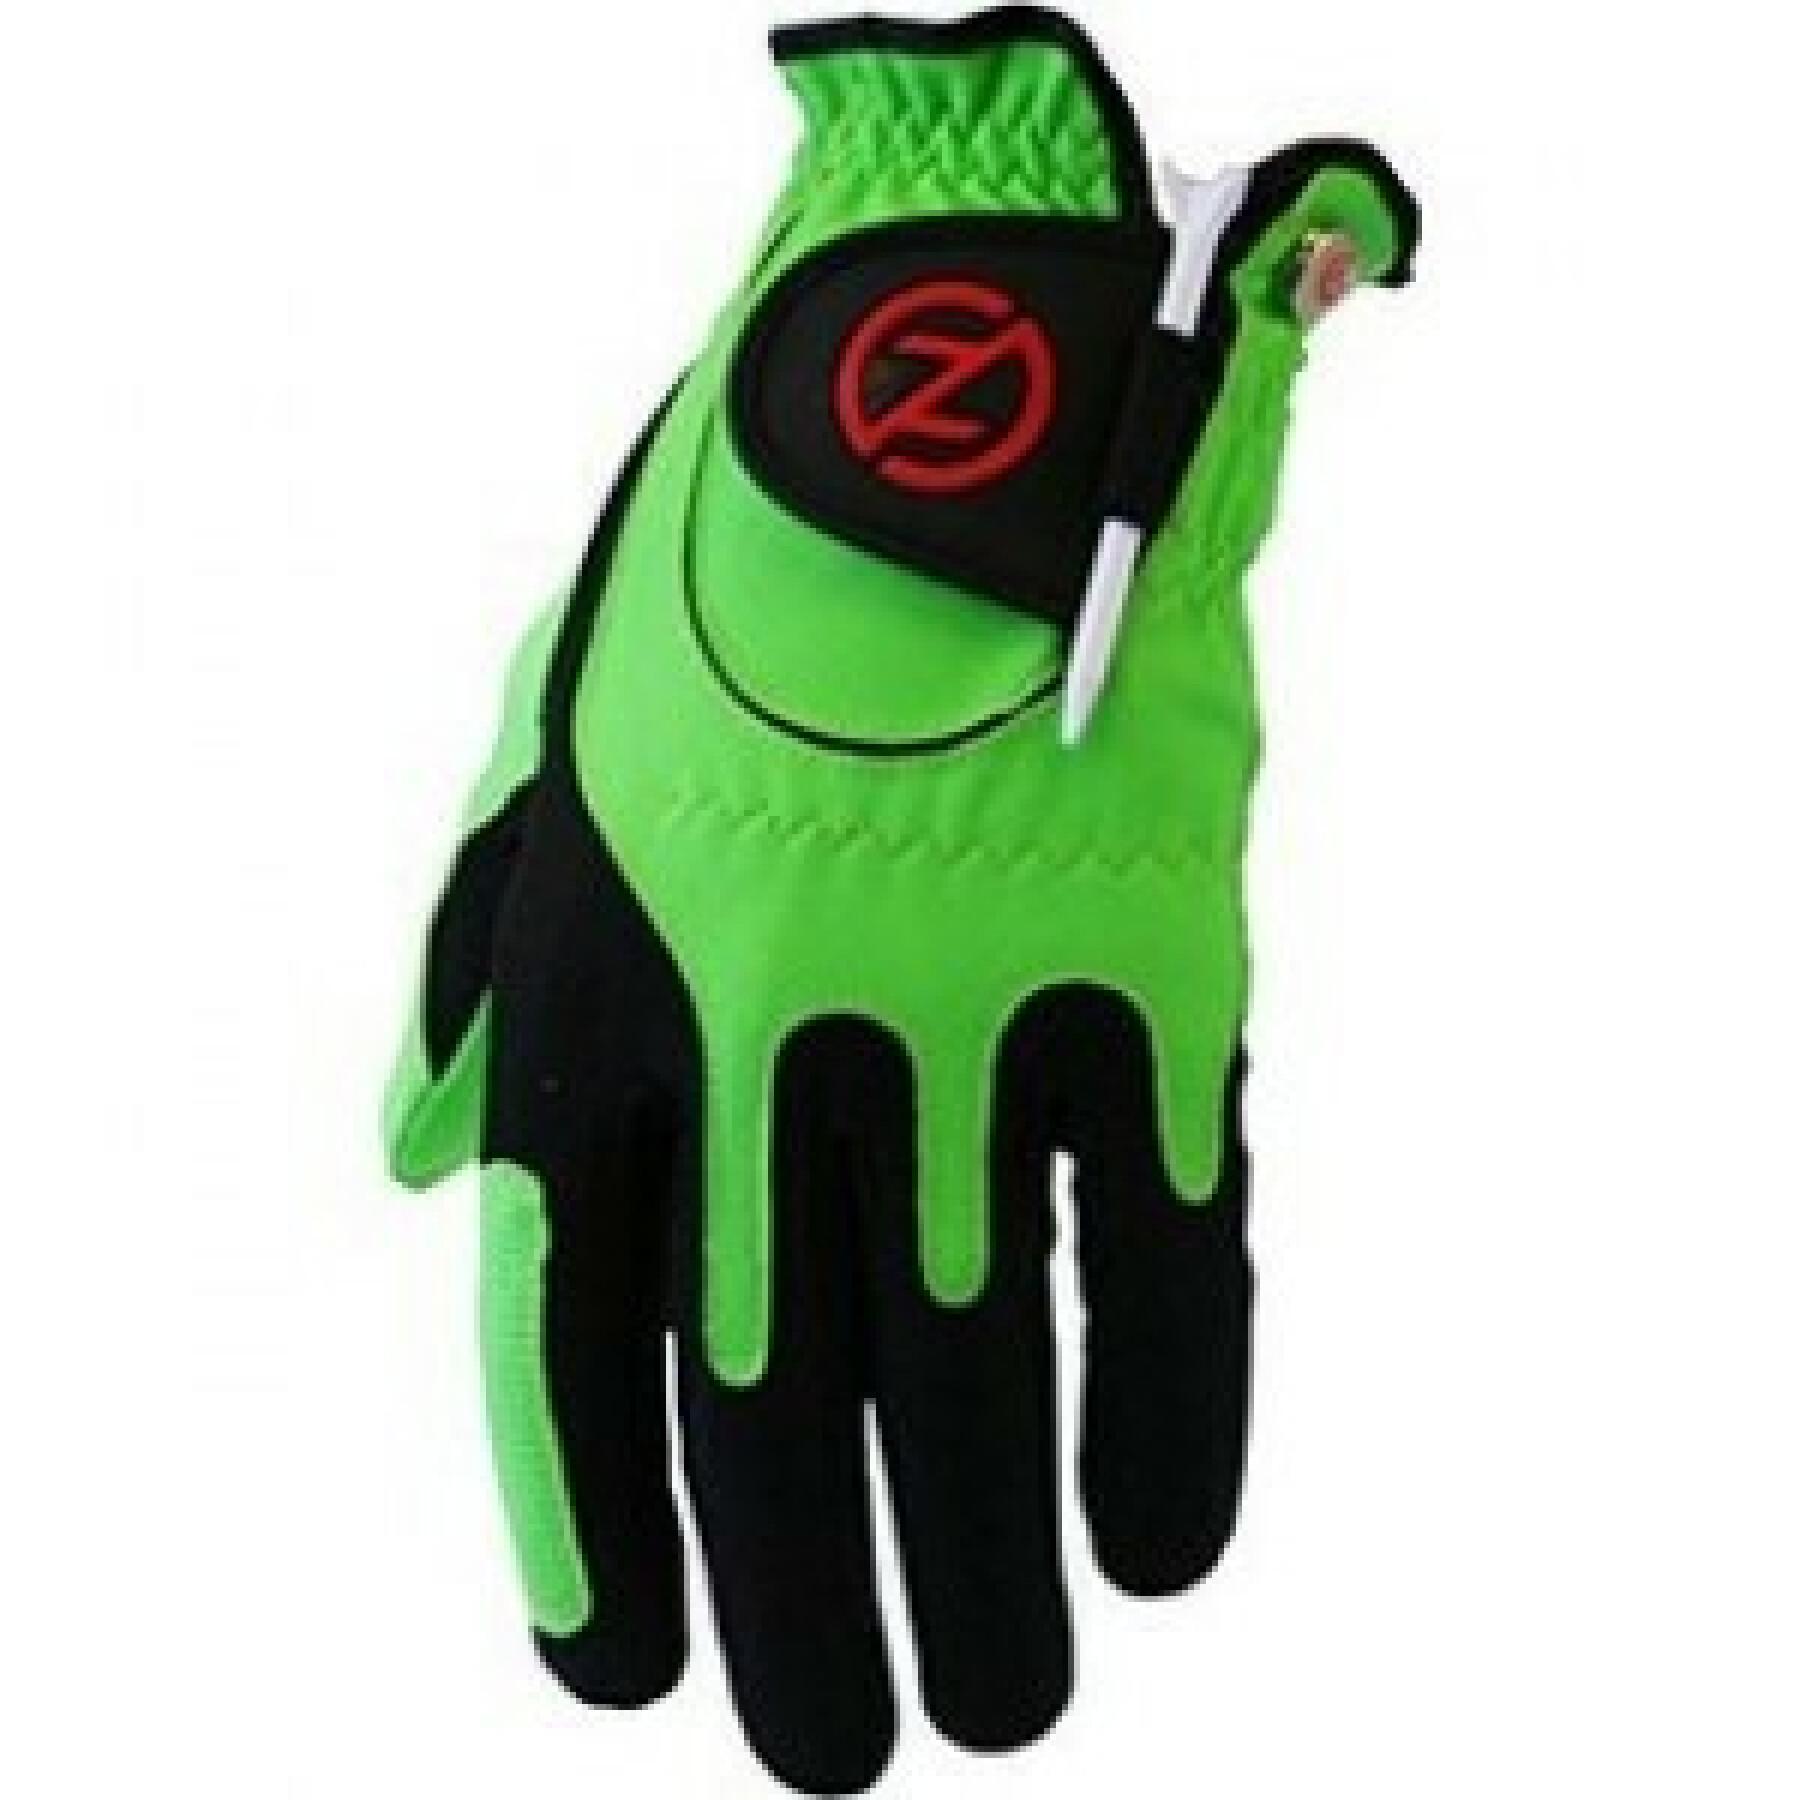 Synthetic glove left hand Zero Friction